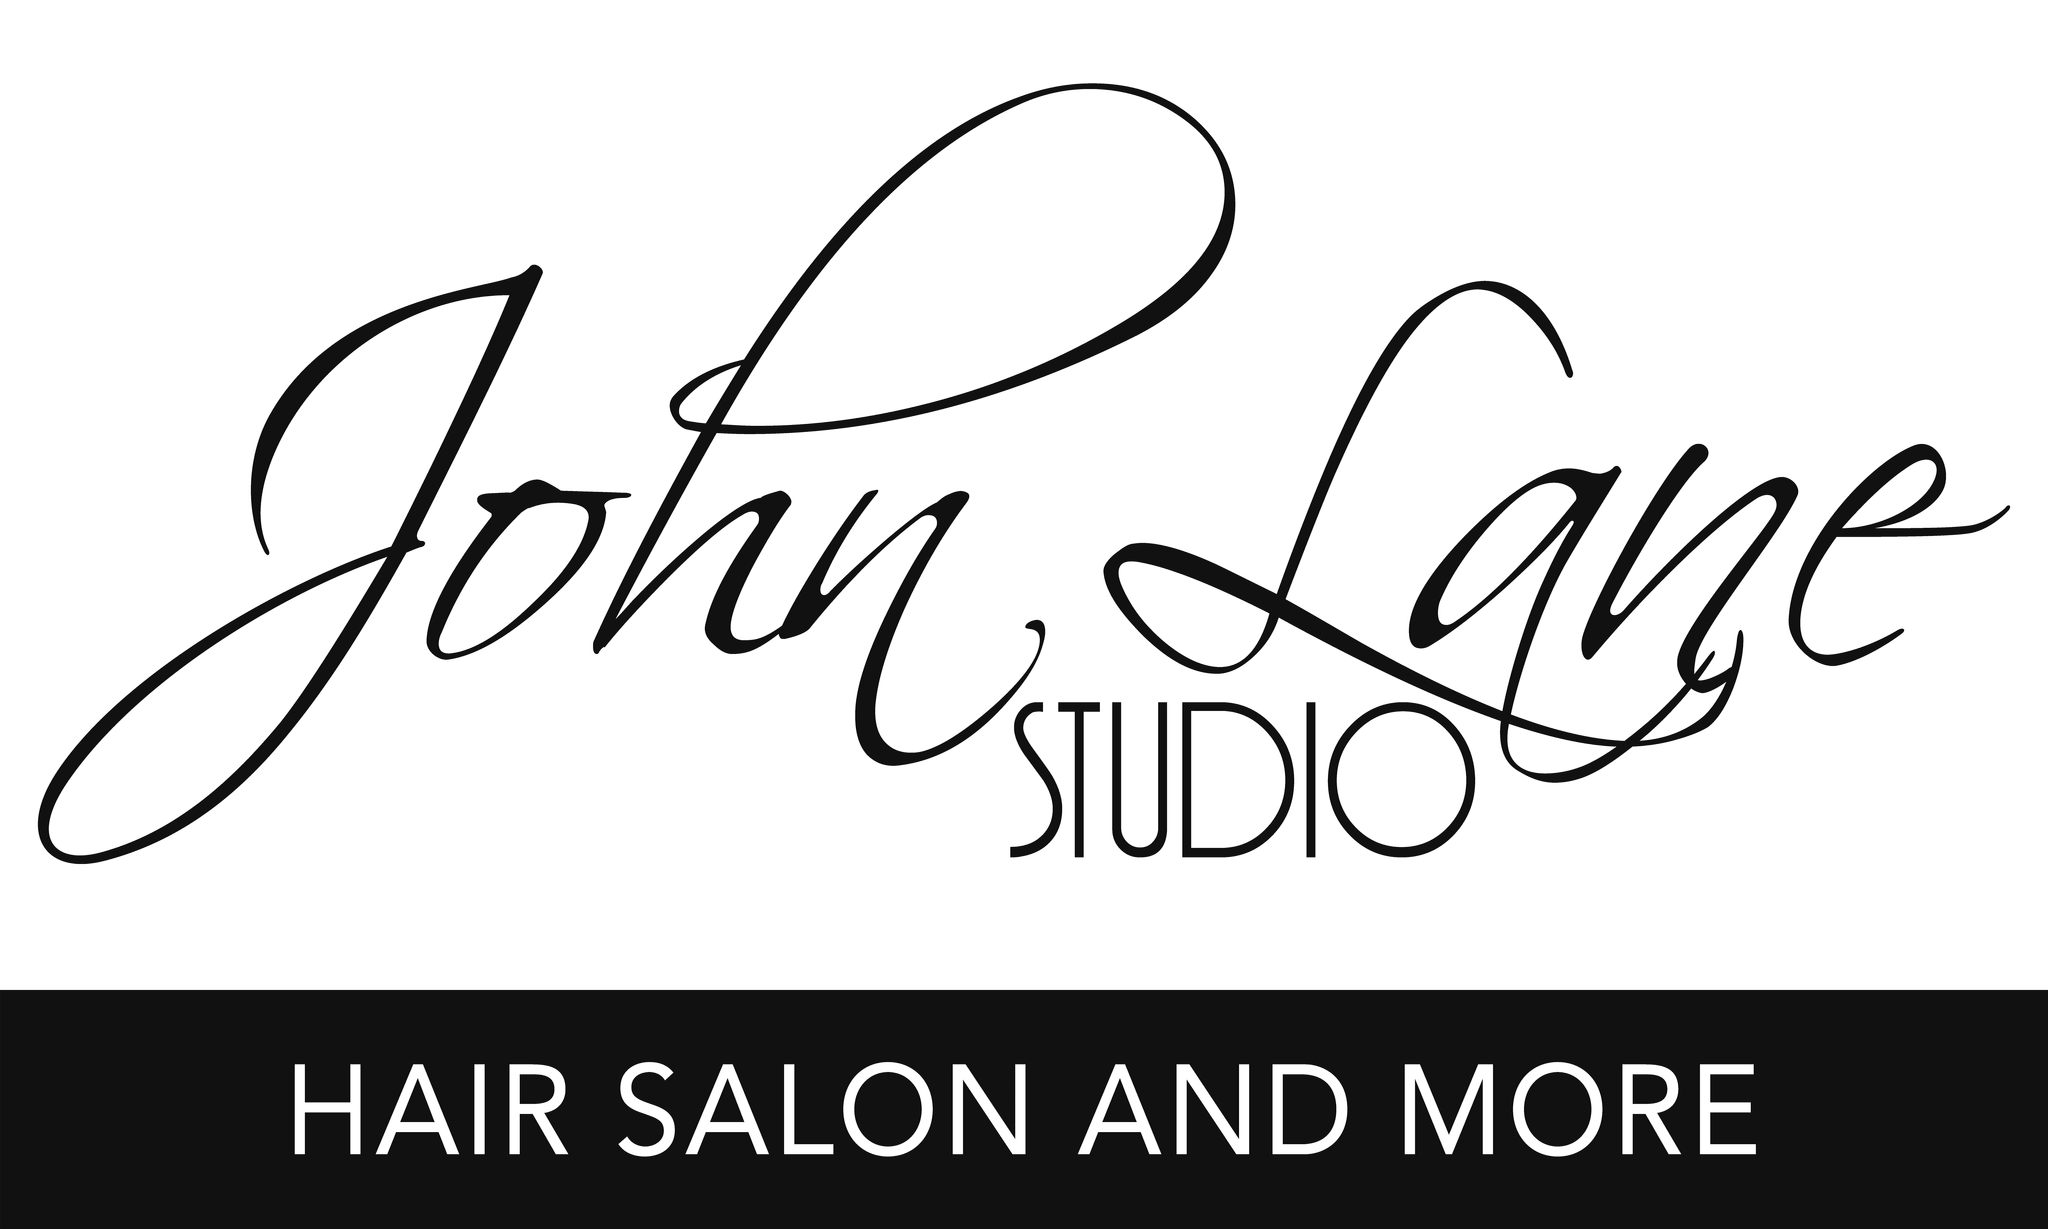 John Lane Studio